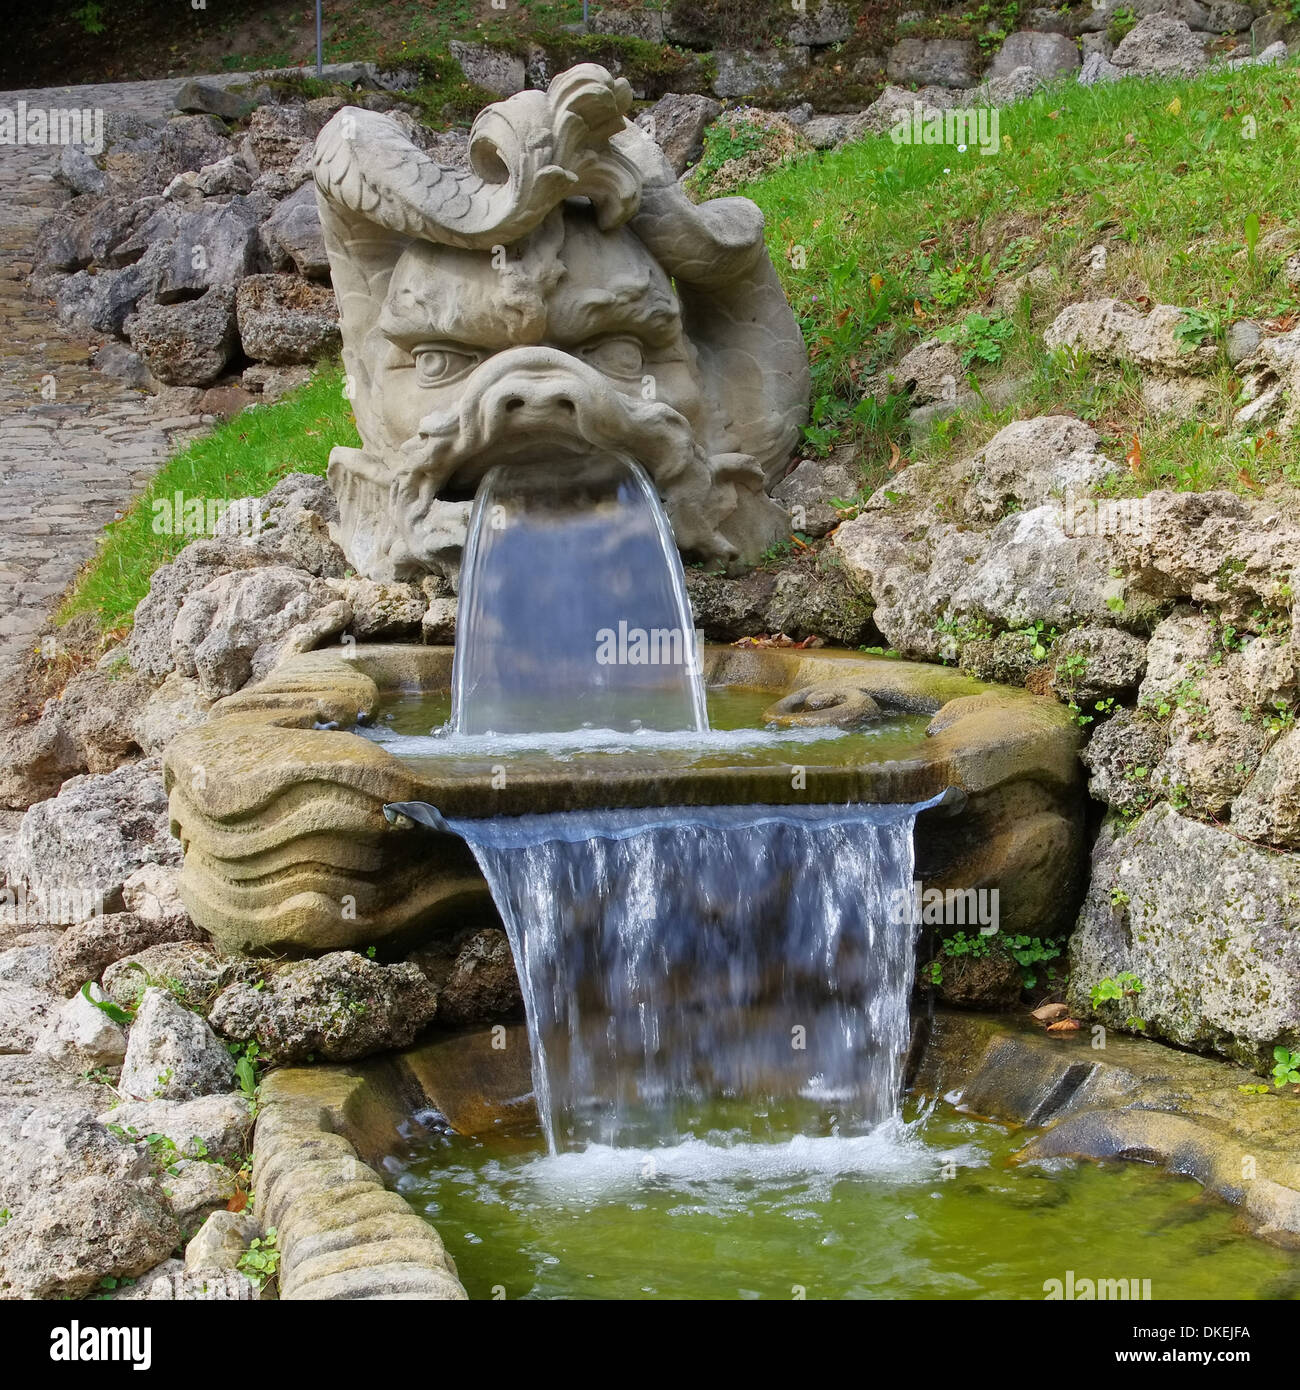 Springbrunnen - fountain 02 Stock Photo